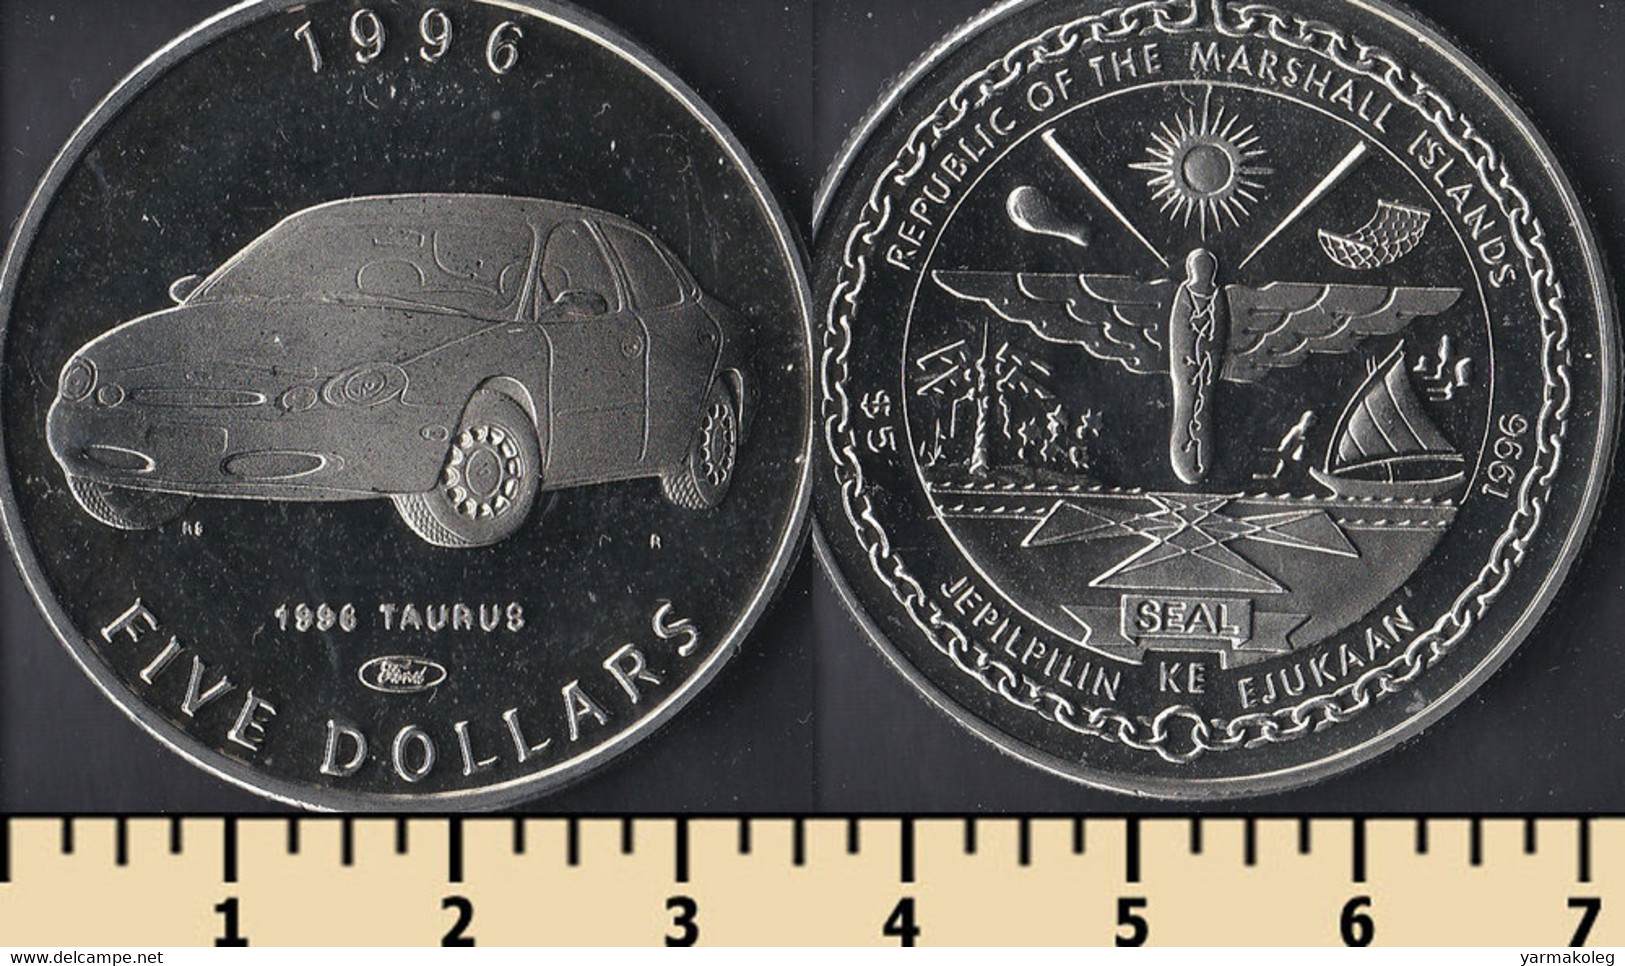 Marshall Islands 5 Dollars 1996 - Marshall Islands